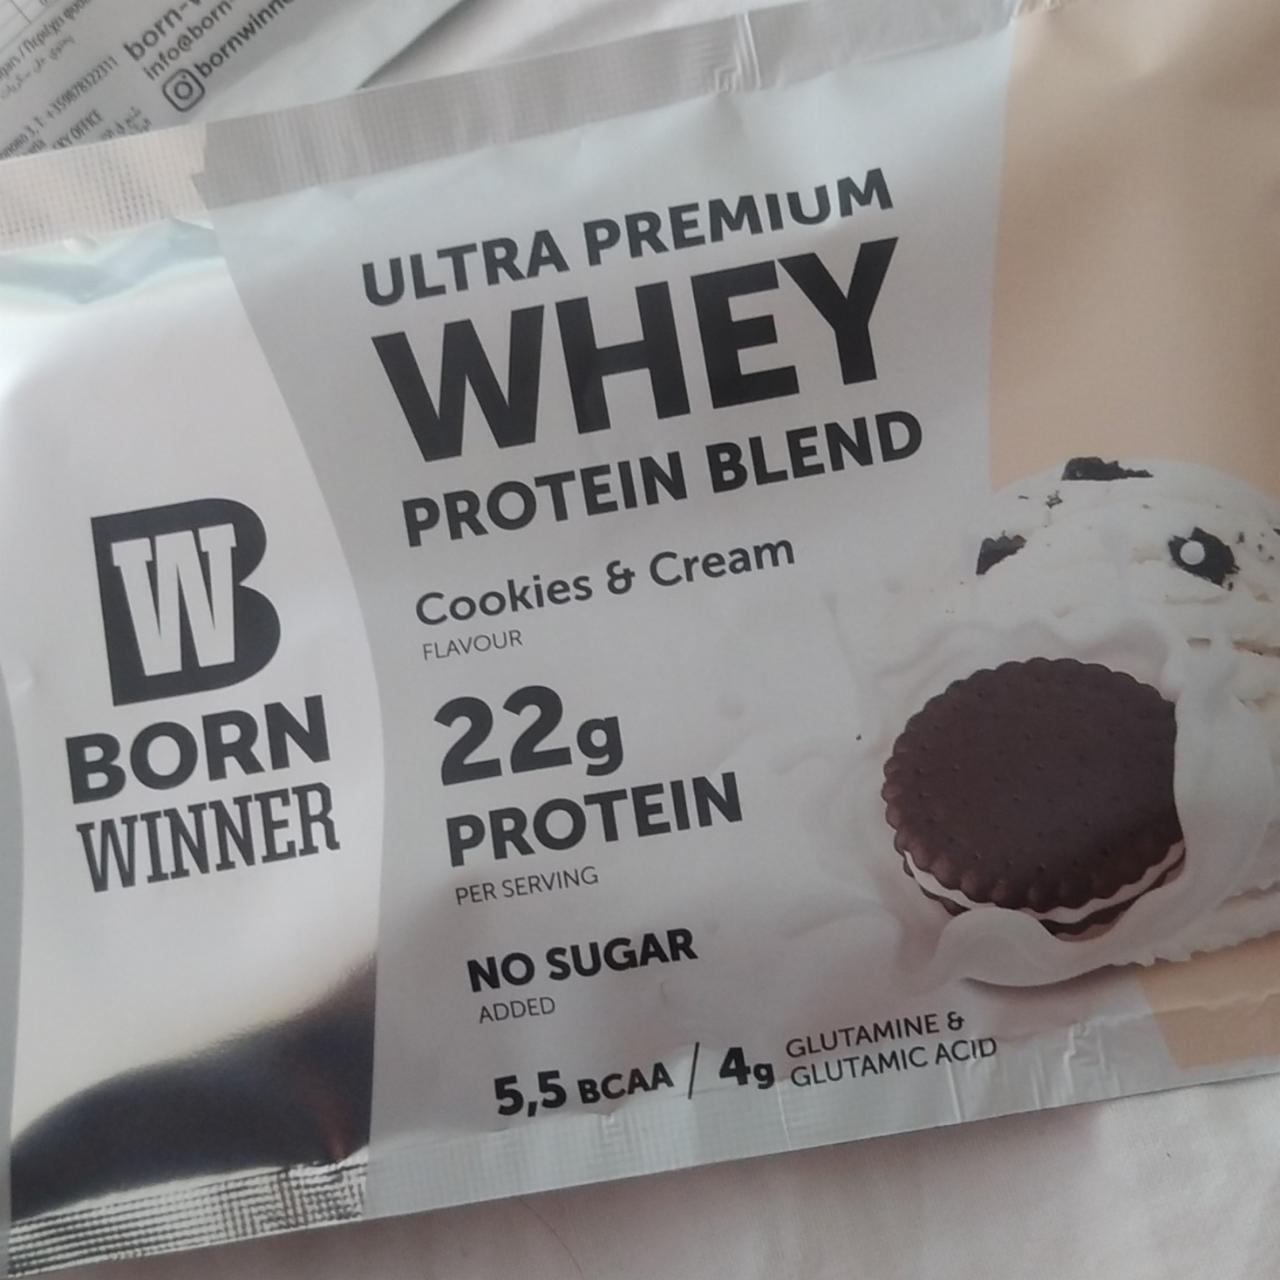 Fotografie - Ultra premium whey protein blend Cookies & Cream Born winner